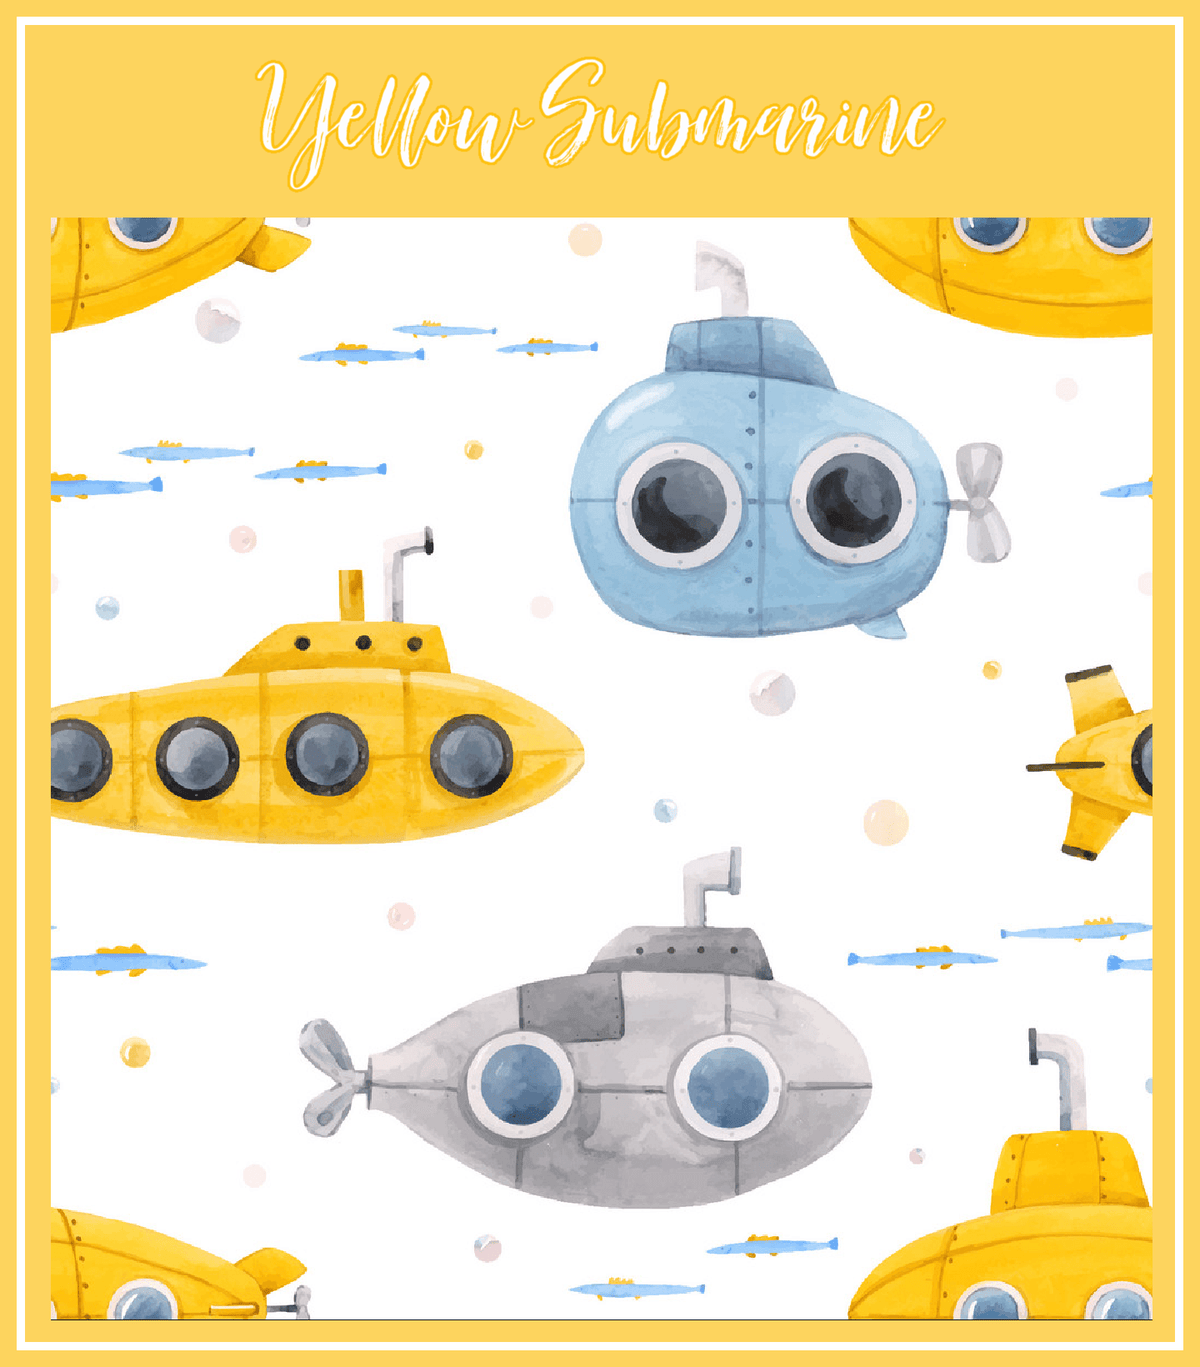 M3 & Minihip | Boxer (2T) | Yellow submarine - MiniHip